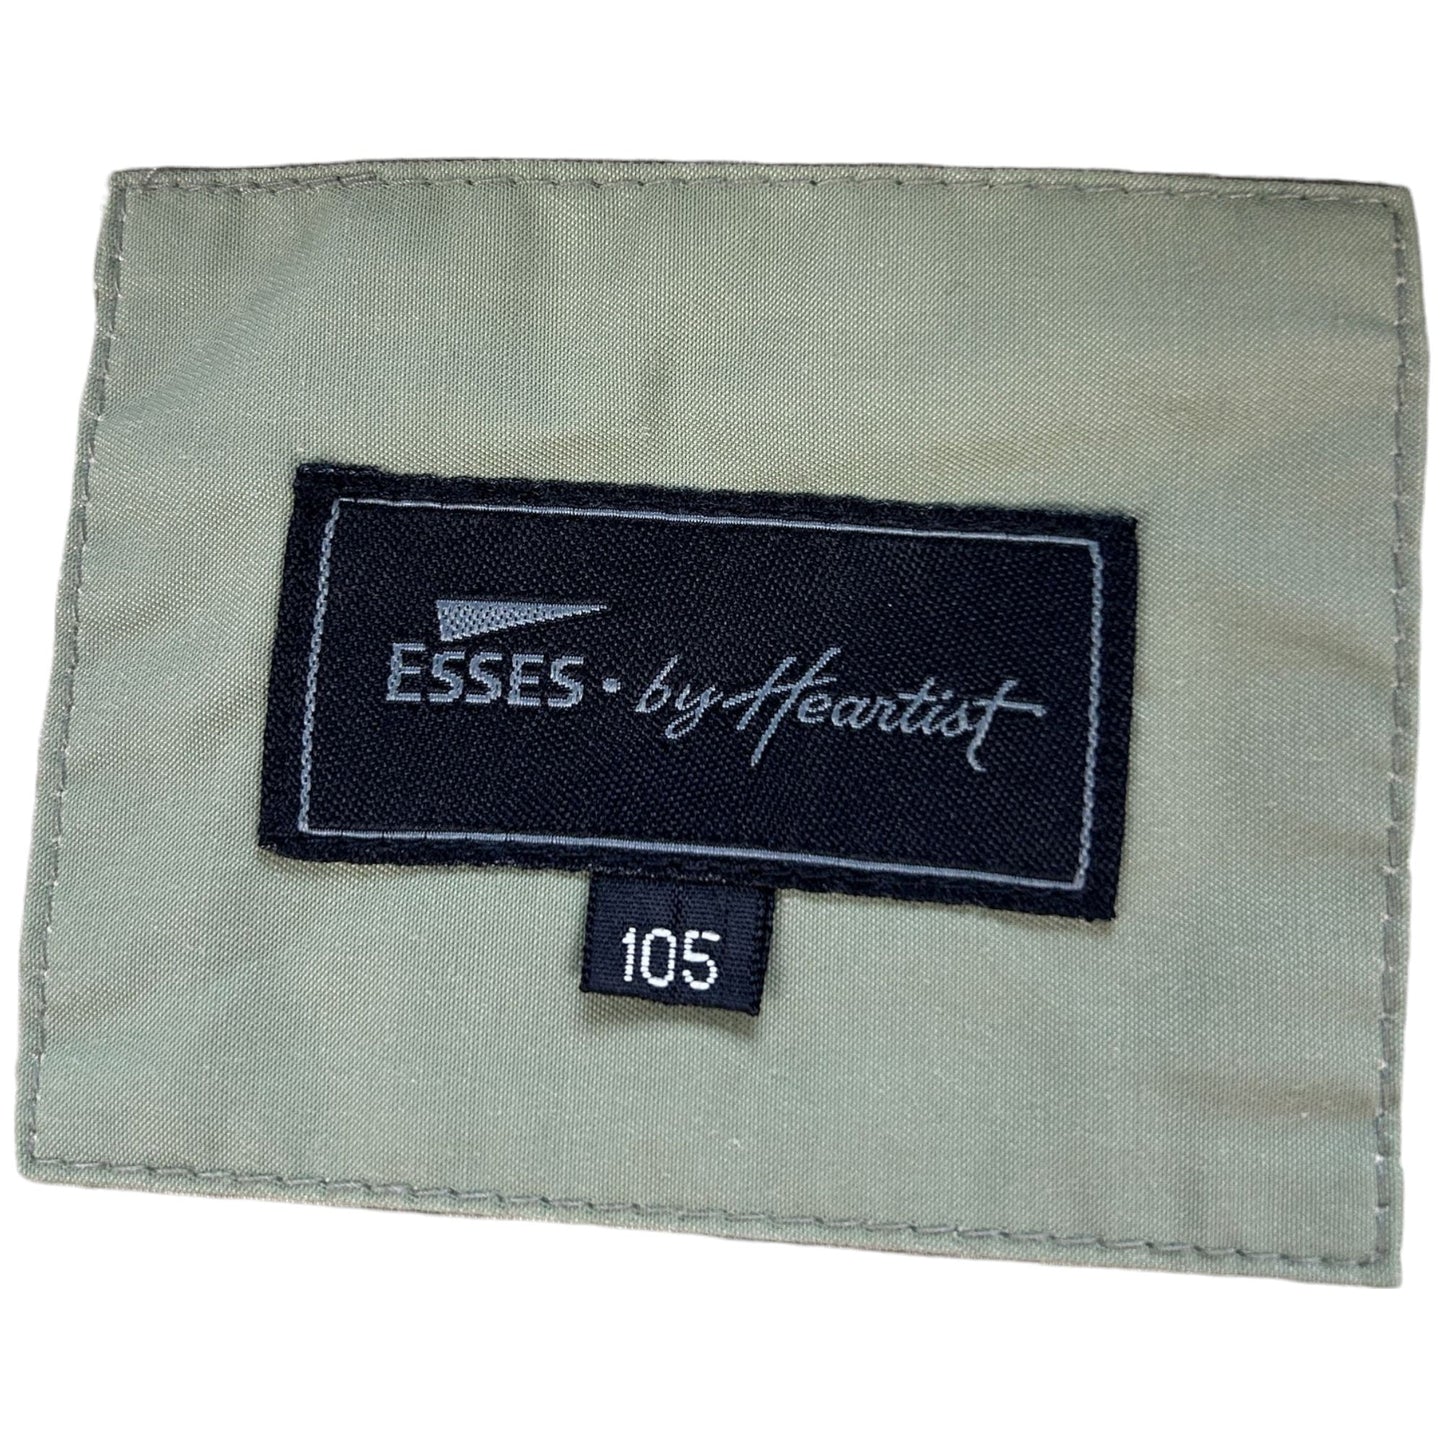 Vintage YSL Yves Saint Laurent X Esses KCSC Zip Up Jacket Size XL